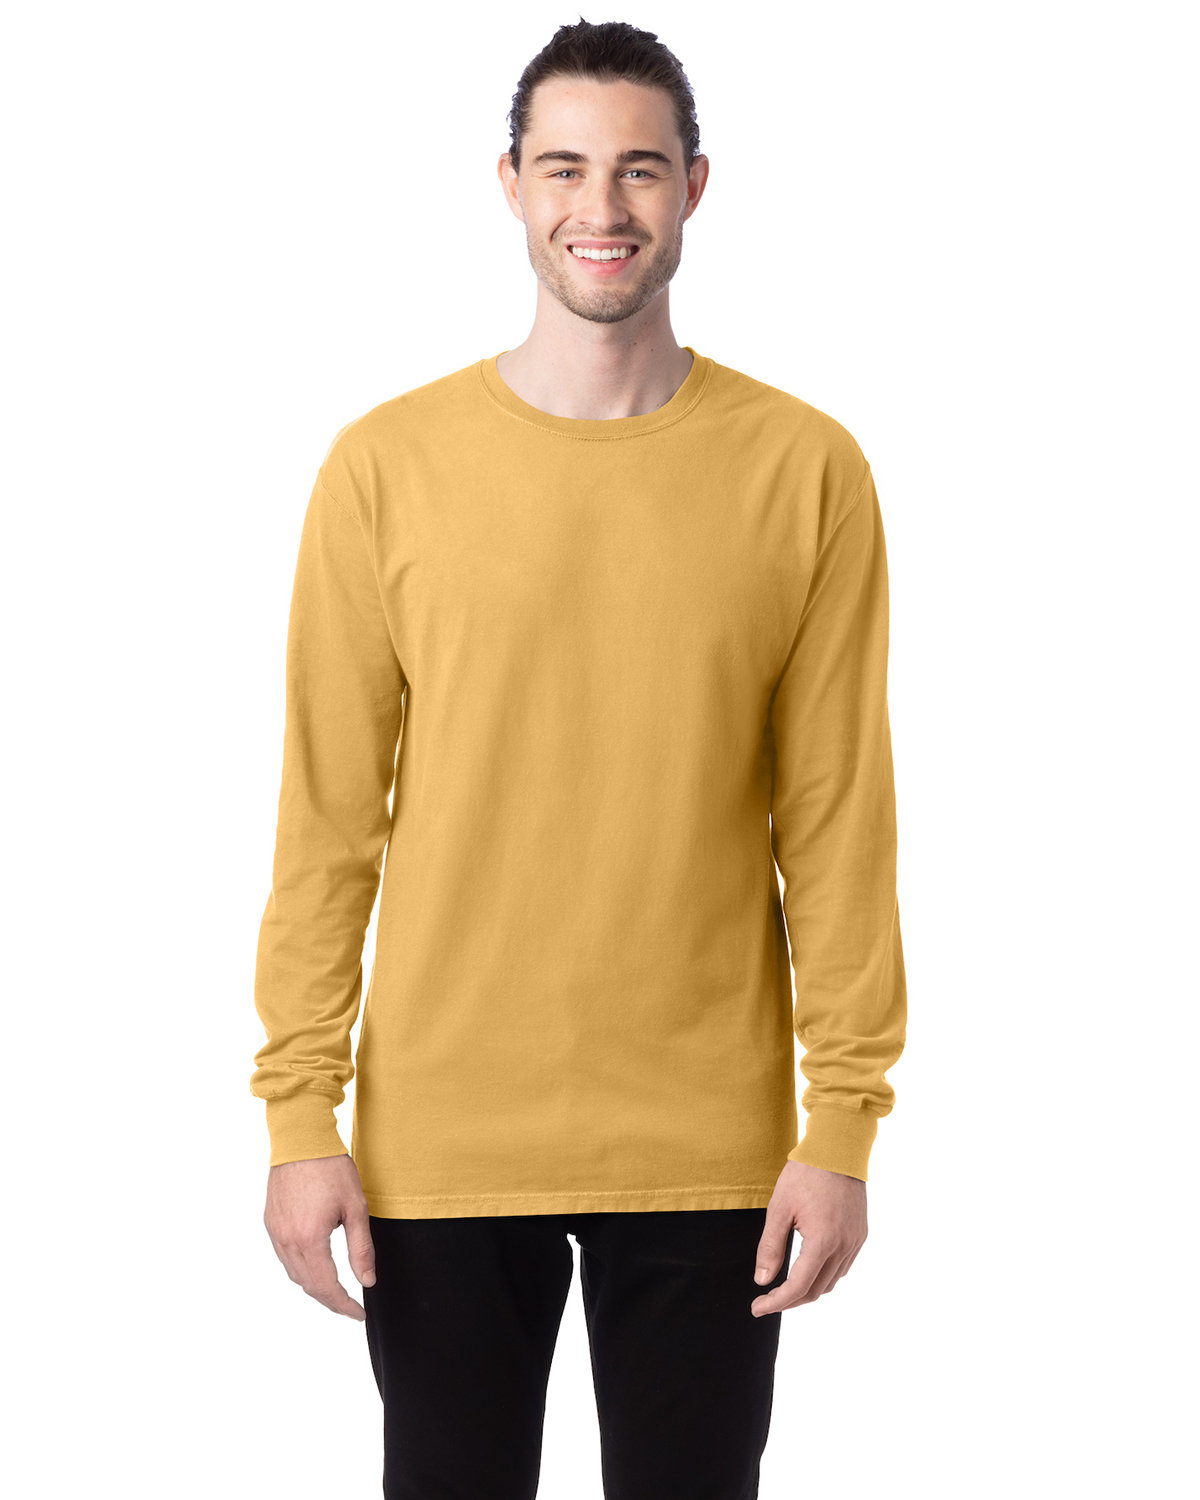 ComfortWash by Hanes Unisex Garment-Dyed Long-Sleeve T-Shirt ARTISAN GOLD 